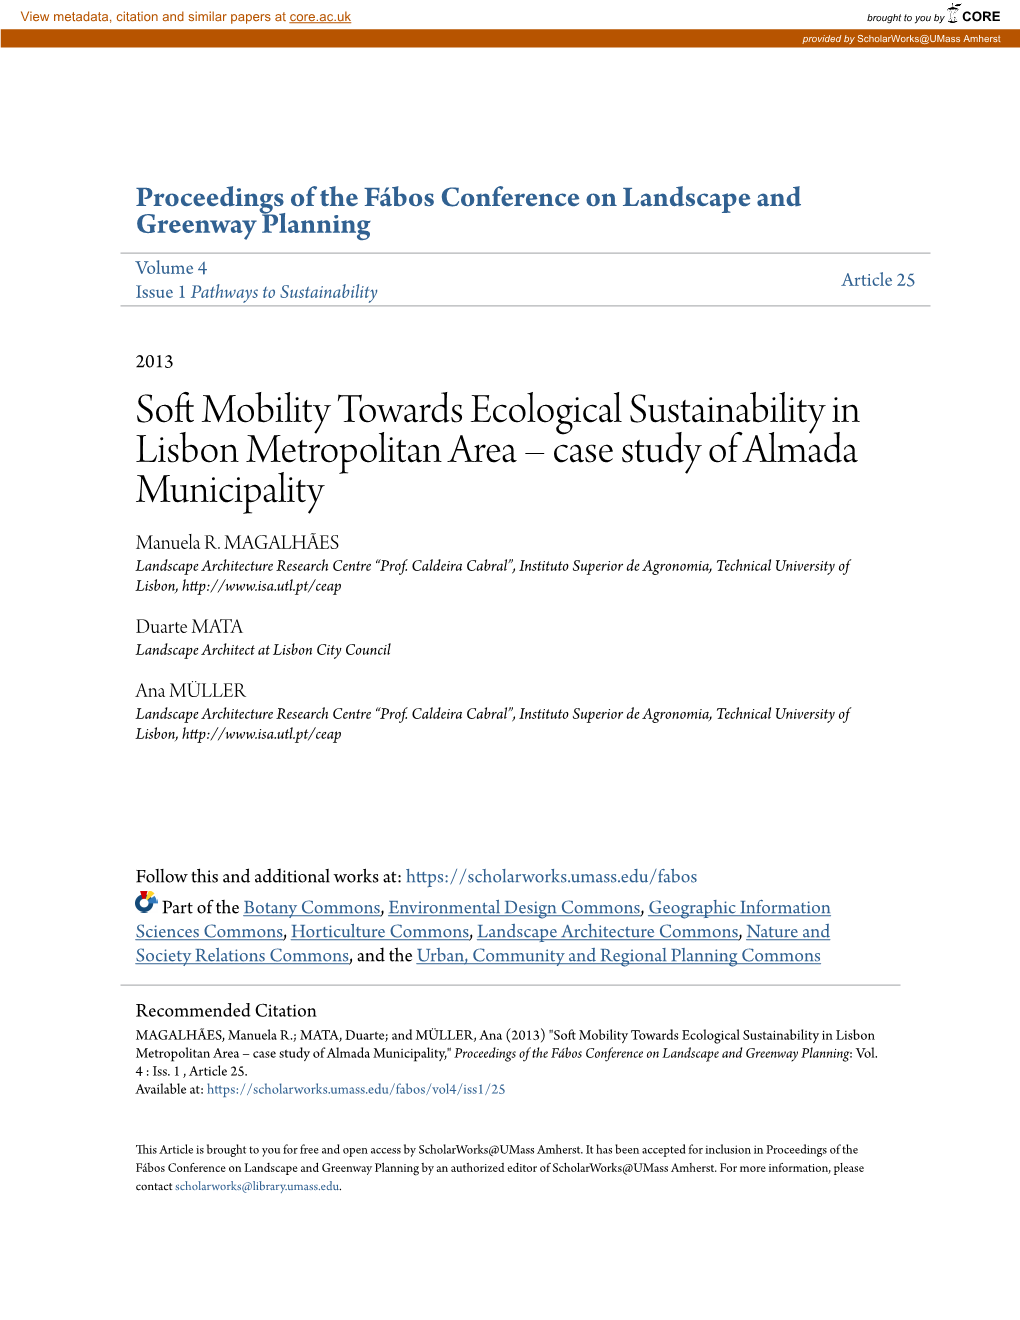 Soft Mobility Towards Ecological Sustainability in Lisbon Metropolitan Area – Case Study of Almada Municipality